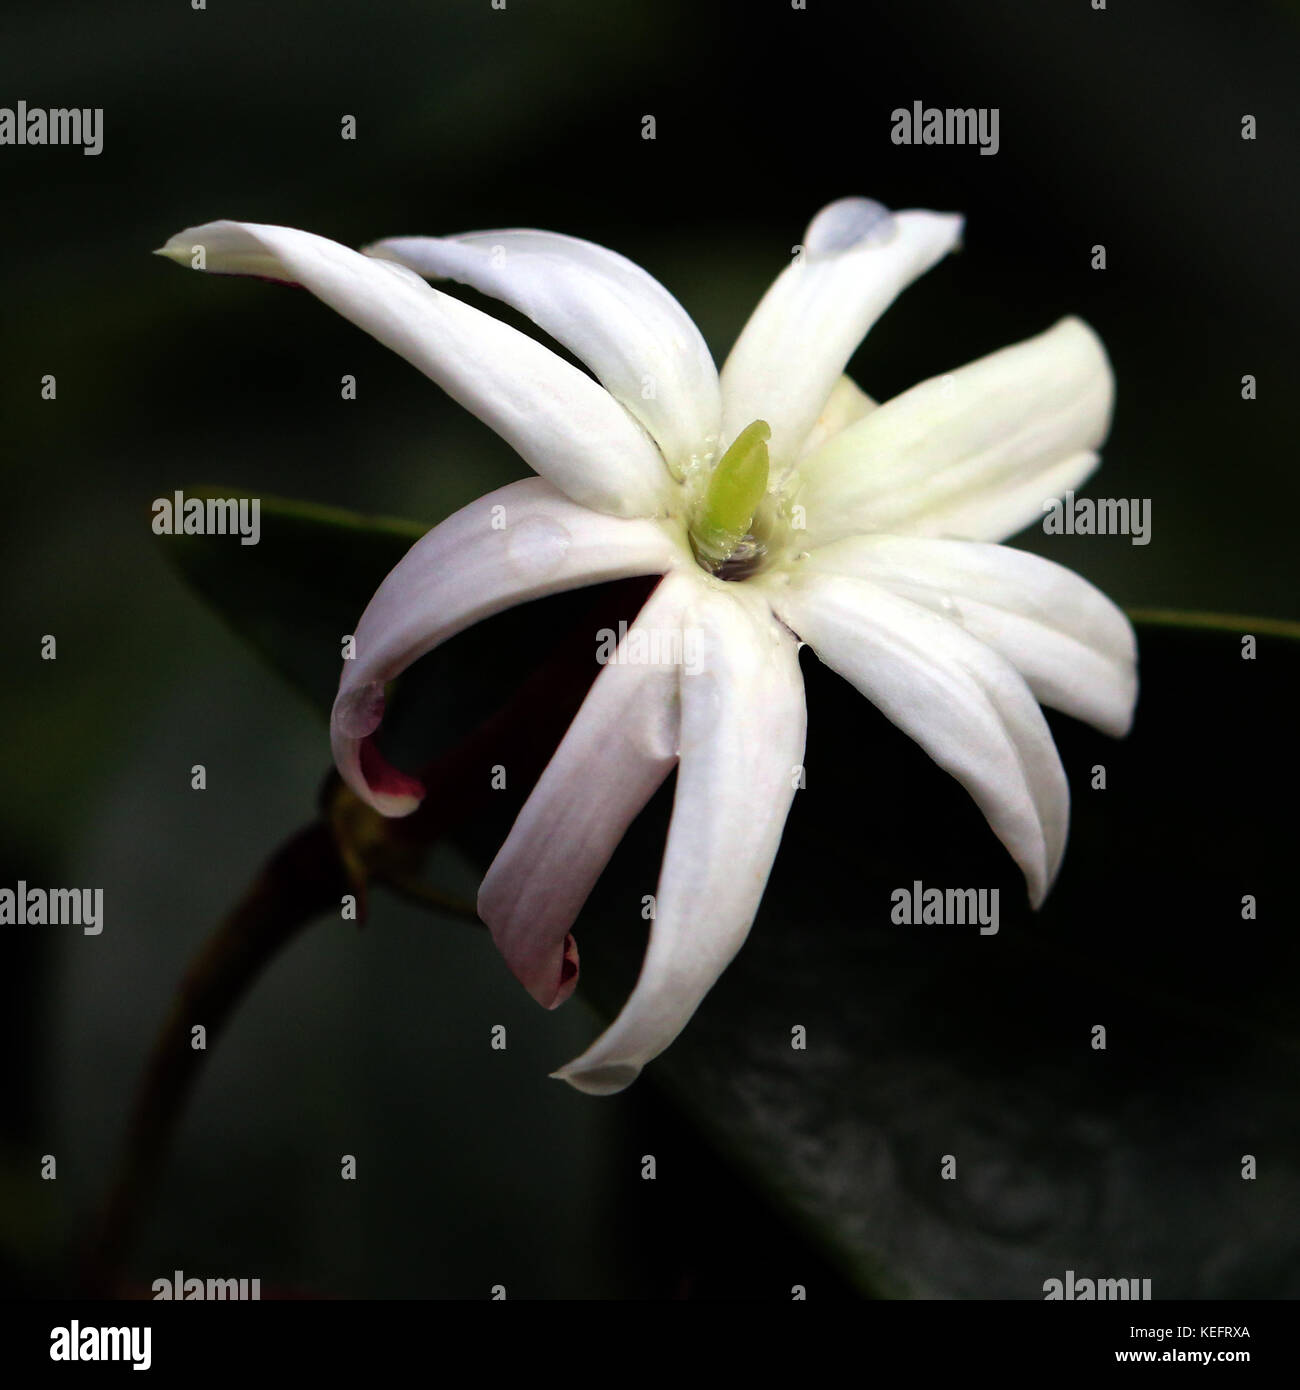 White jasmine flower (Jasminum nitidum) with green centre Stock Photo